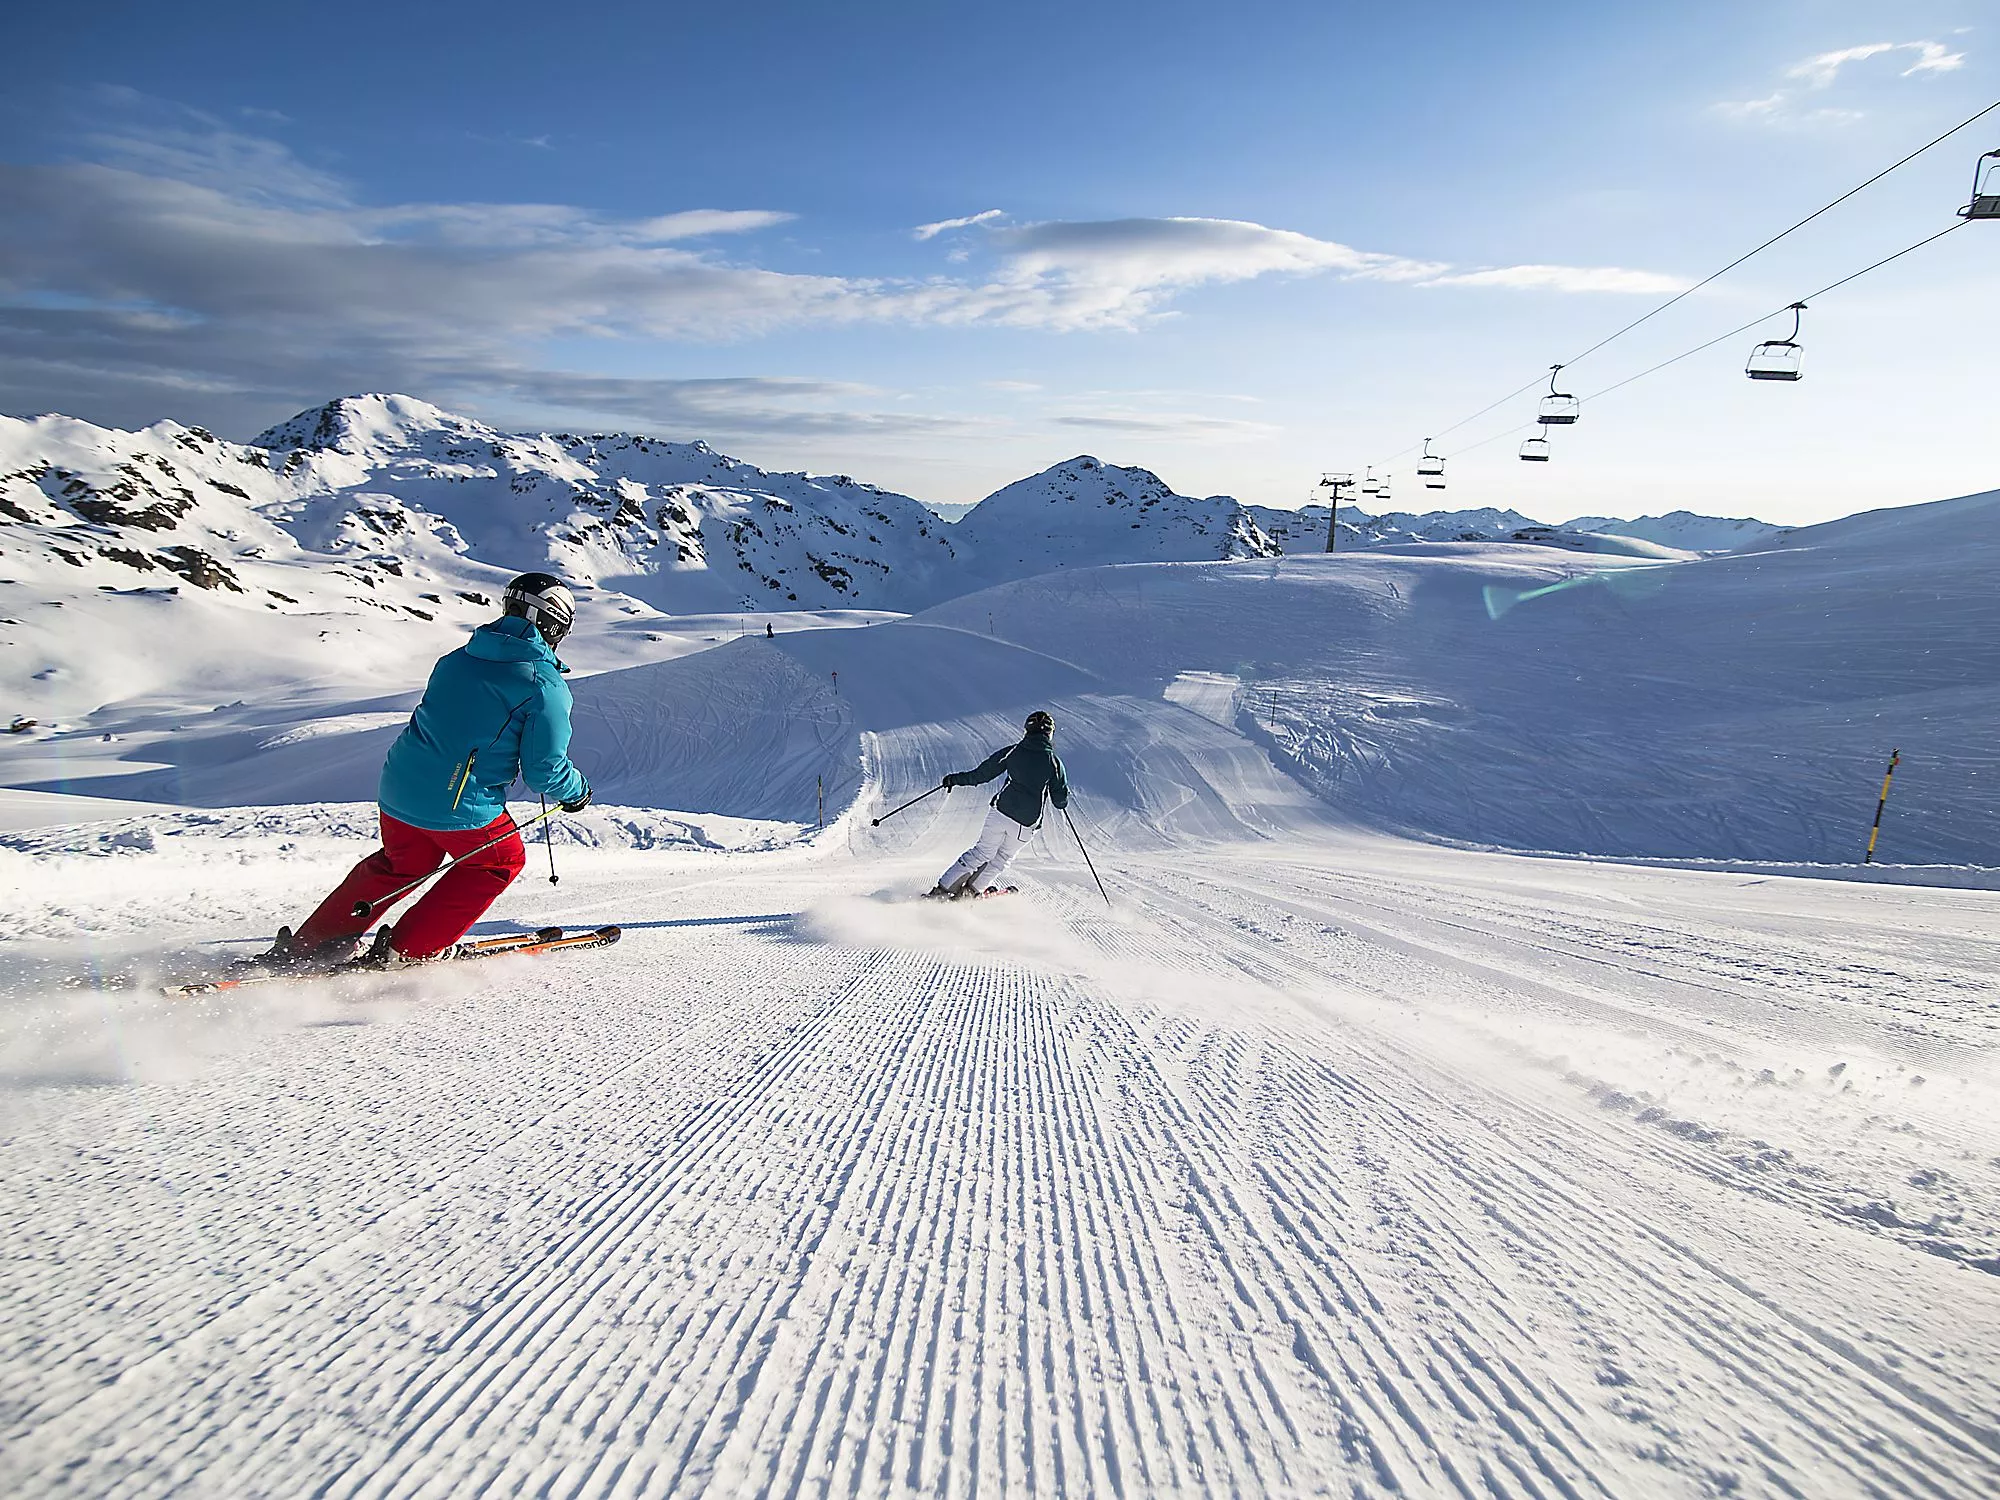 Skischule Arena in Austria, Europe | Snowboarding,Skiing - Rated 0.8